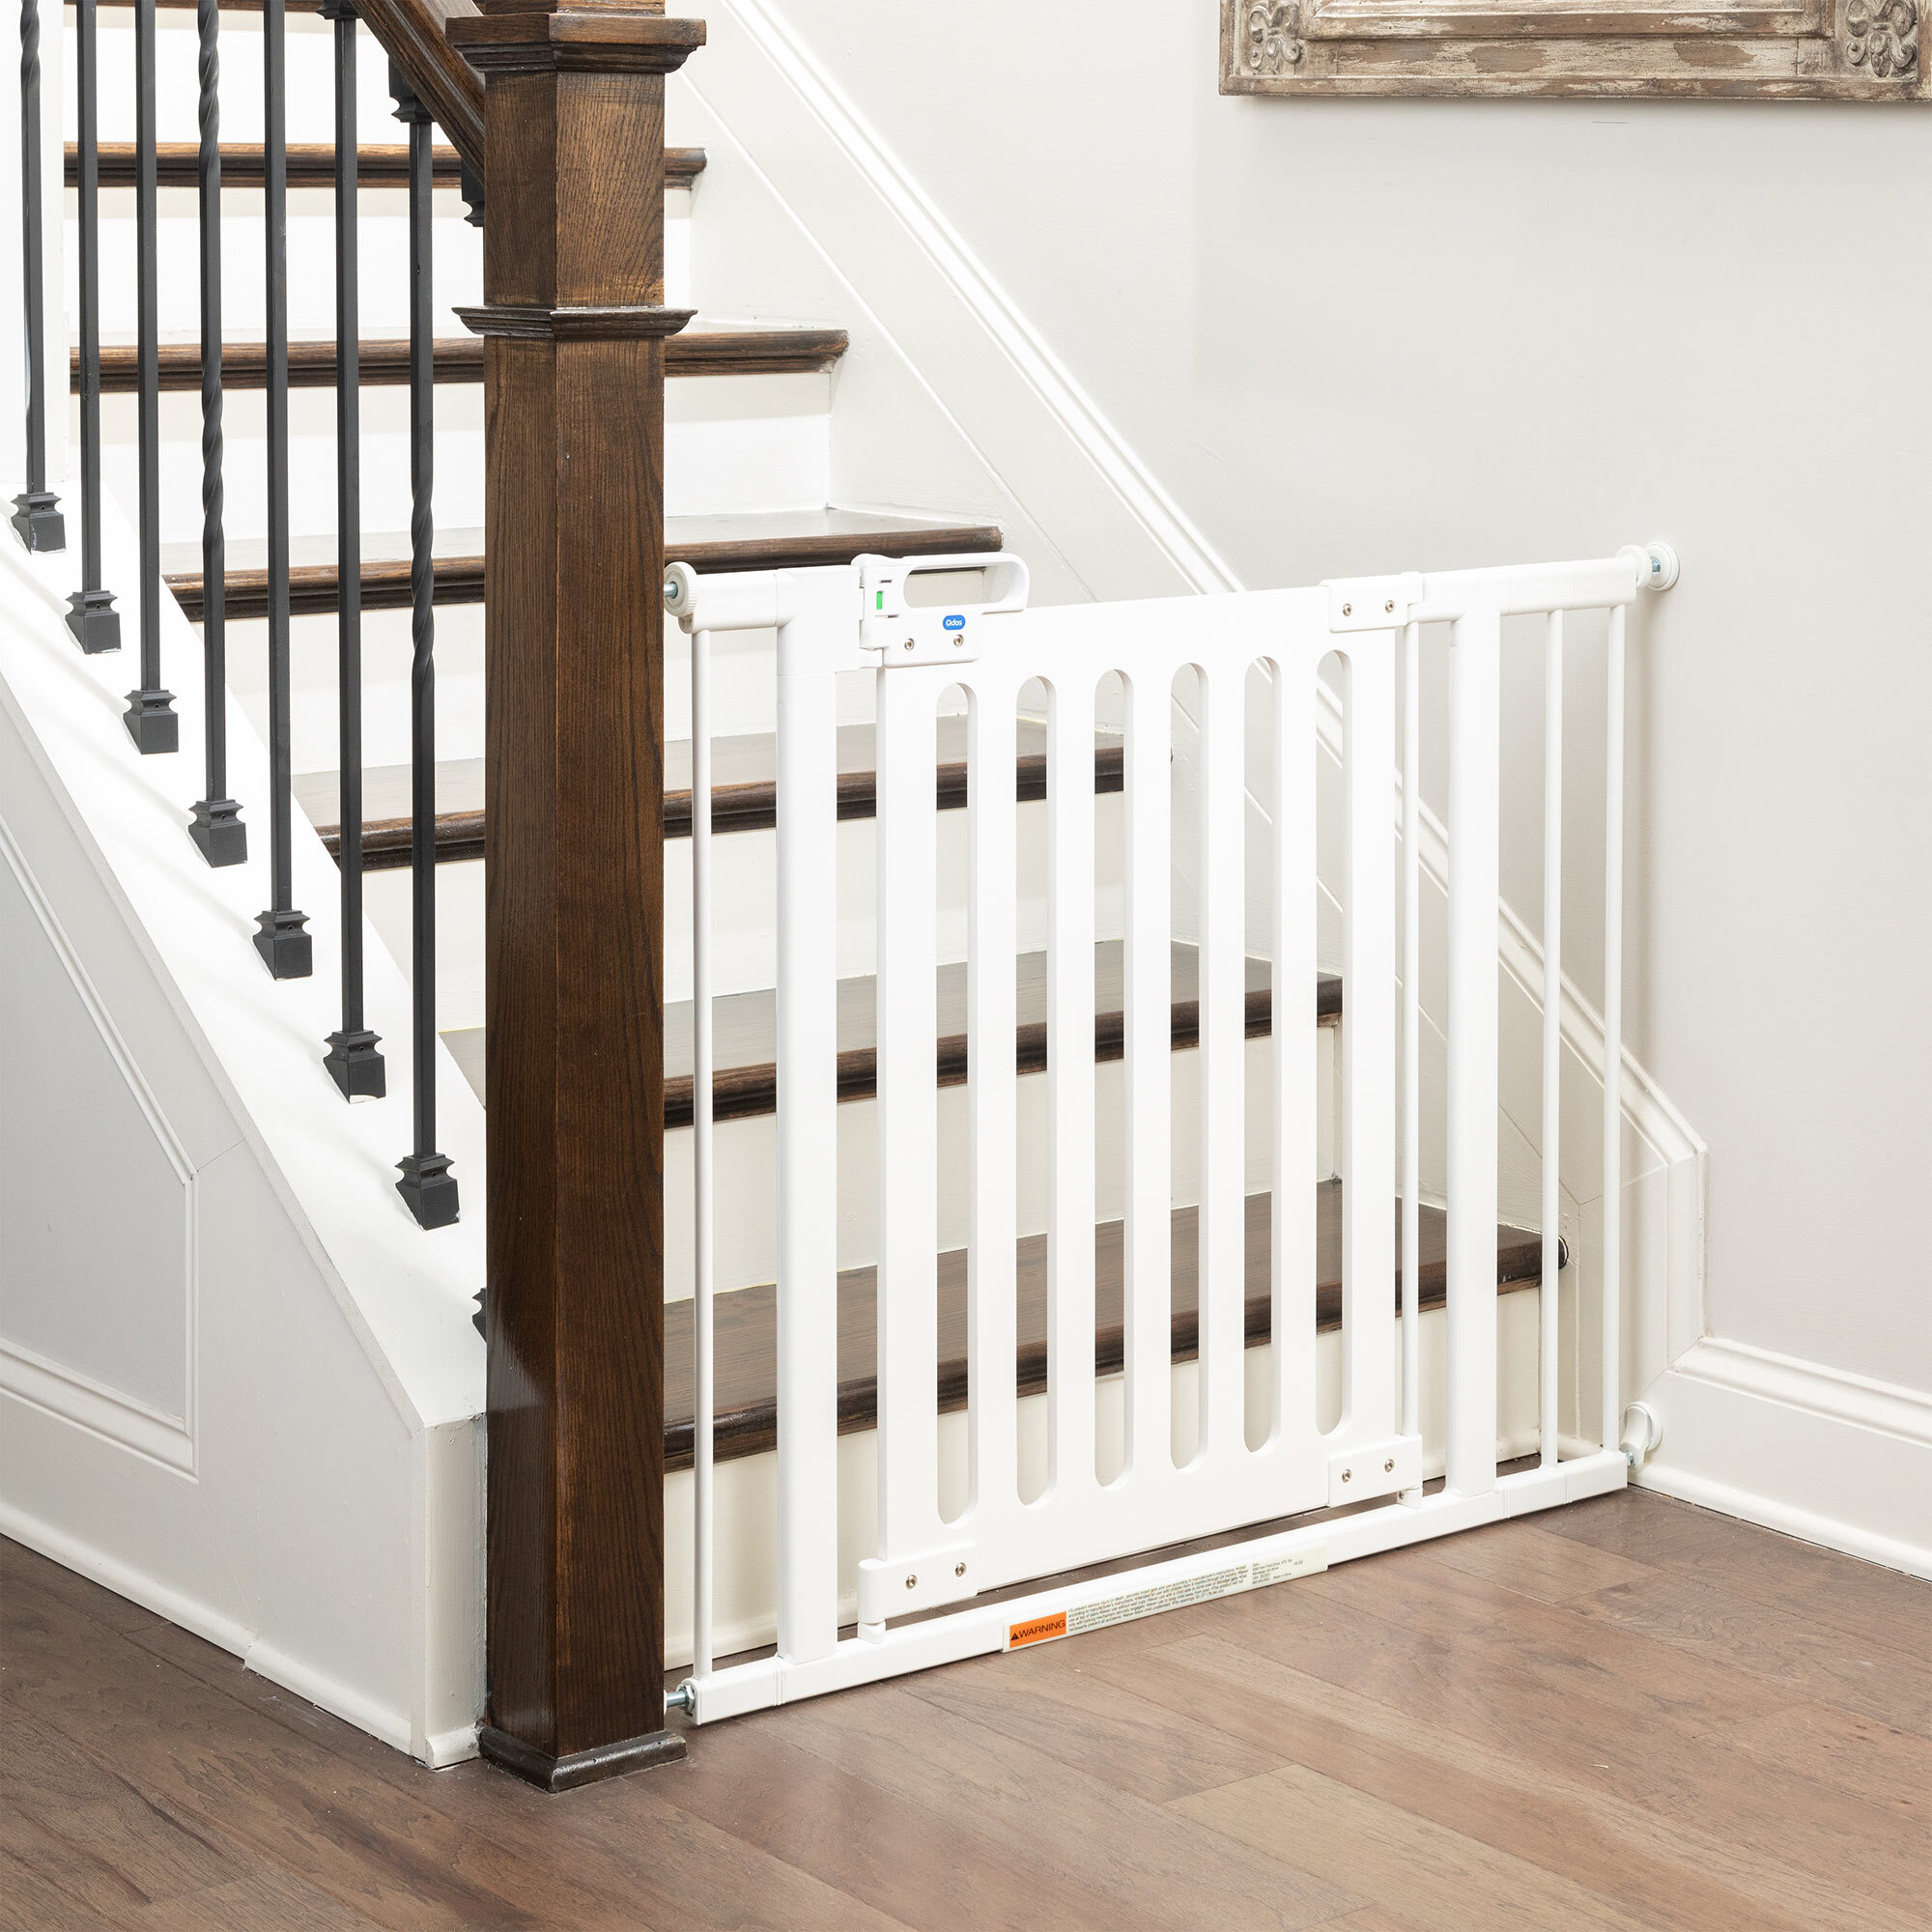 Spectrum Designer Baby Gate, Pressure Mount at bottom of stairs